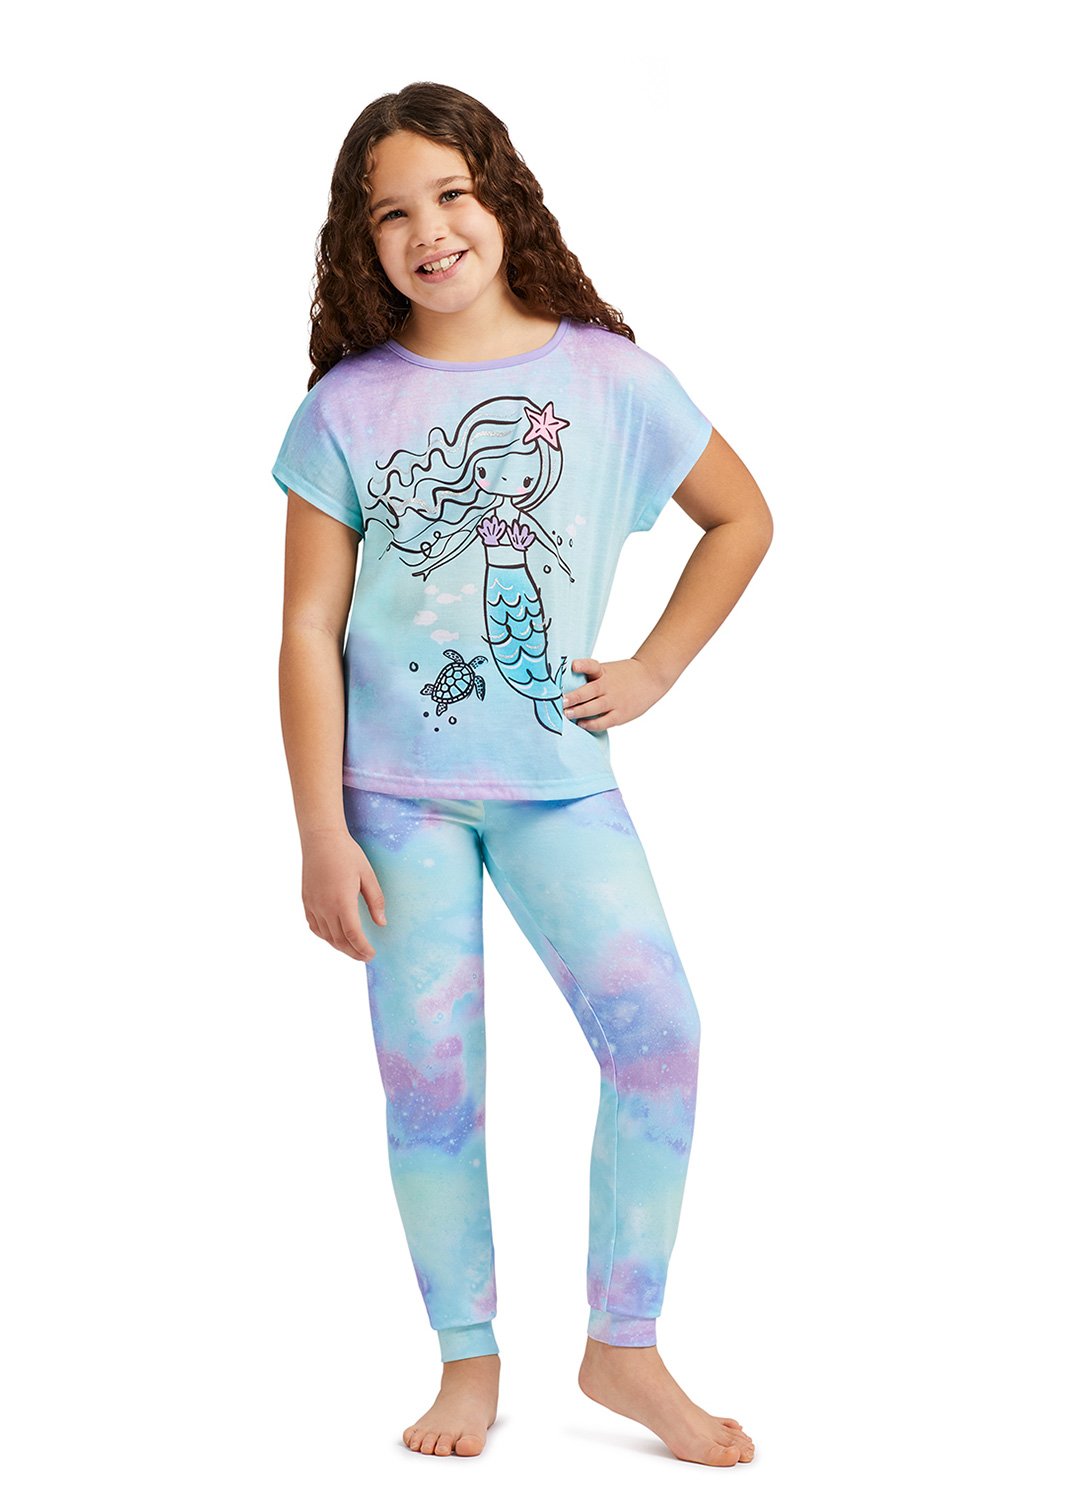 Girl wearing Aqua Mermaid Top, Jogger Pants